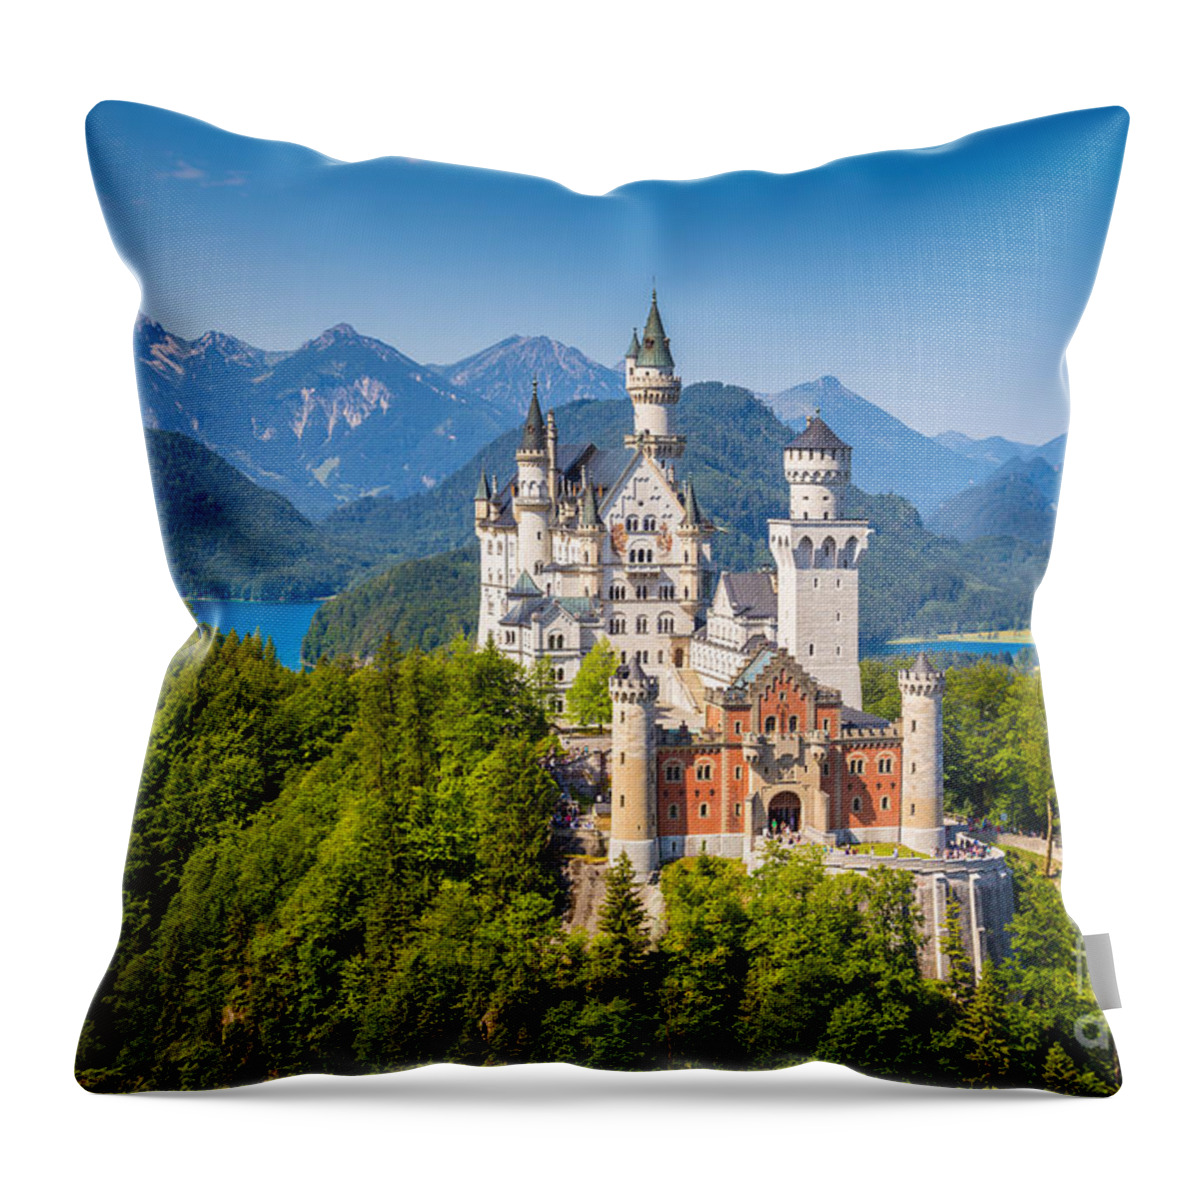 Alps Throw Pillow featuring the photograph Neuschwanstein Fairytale Castle by JR Photography